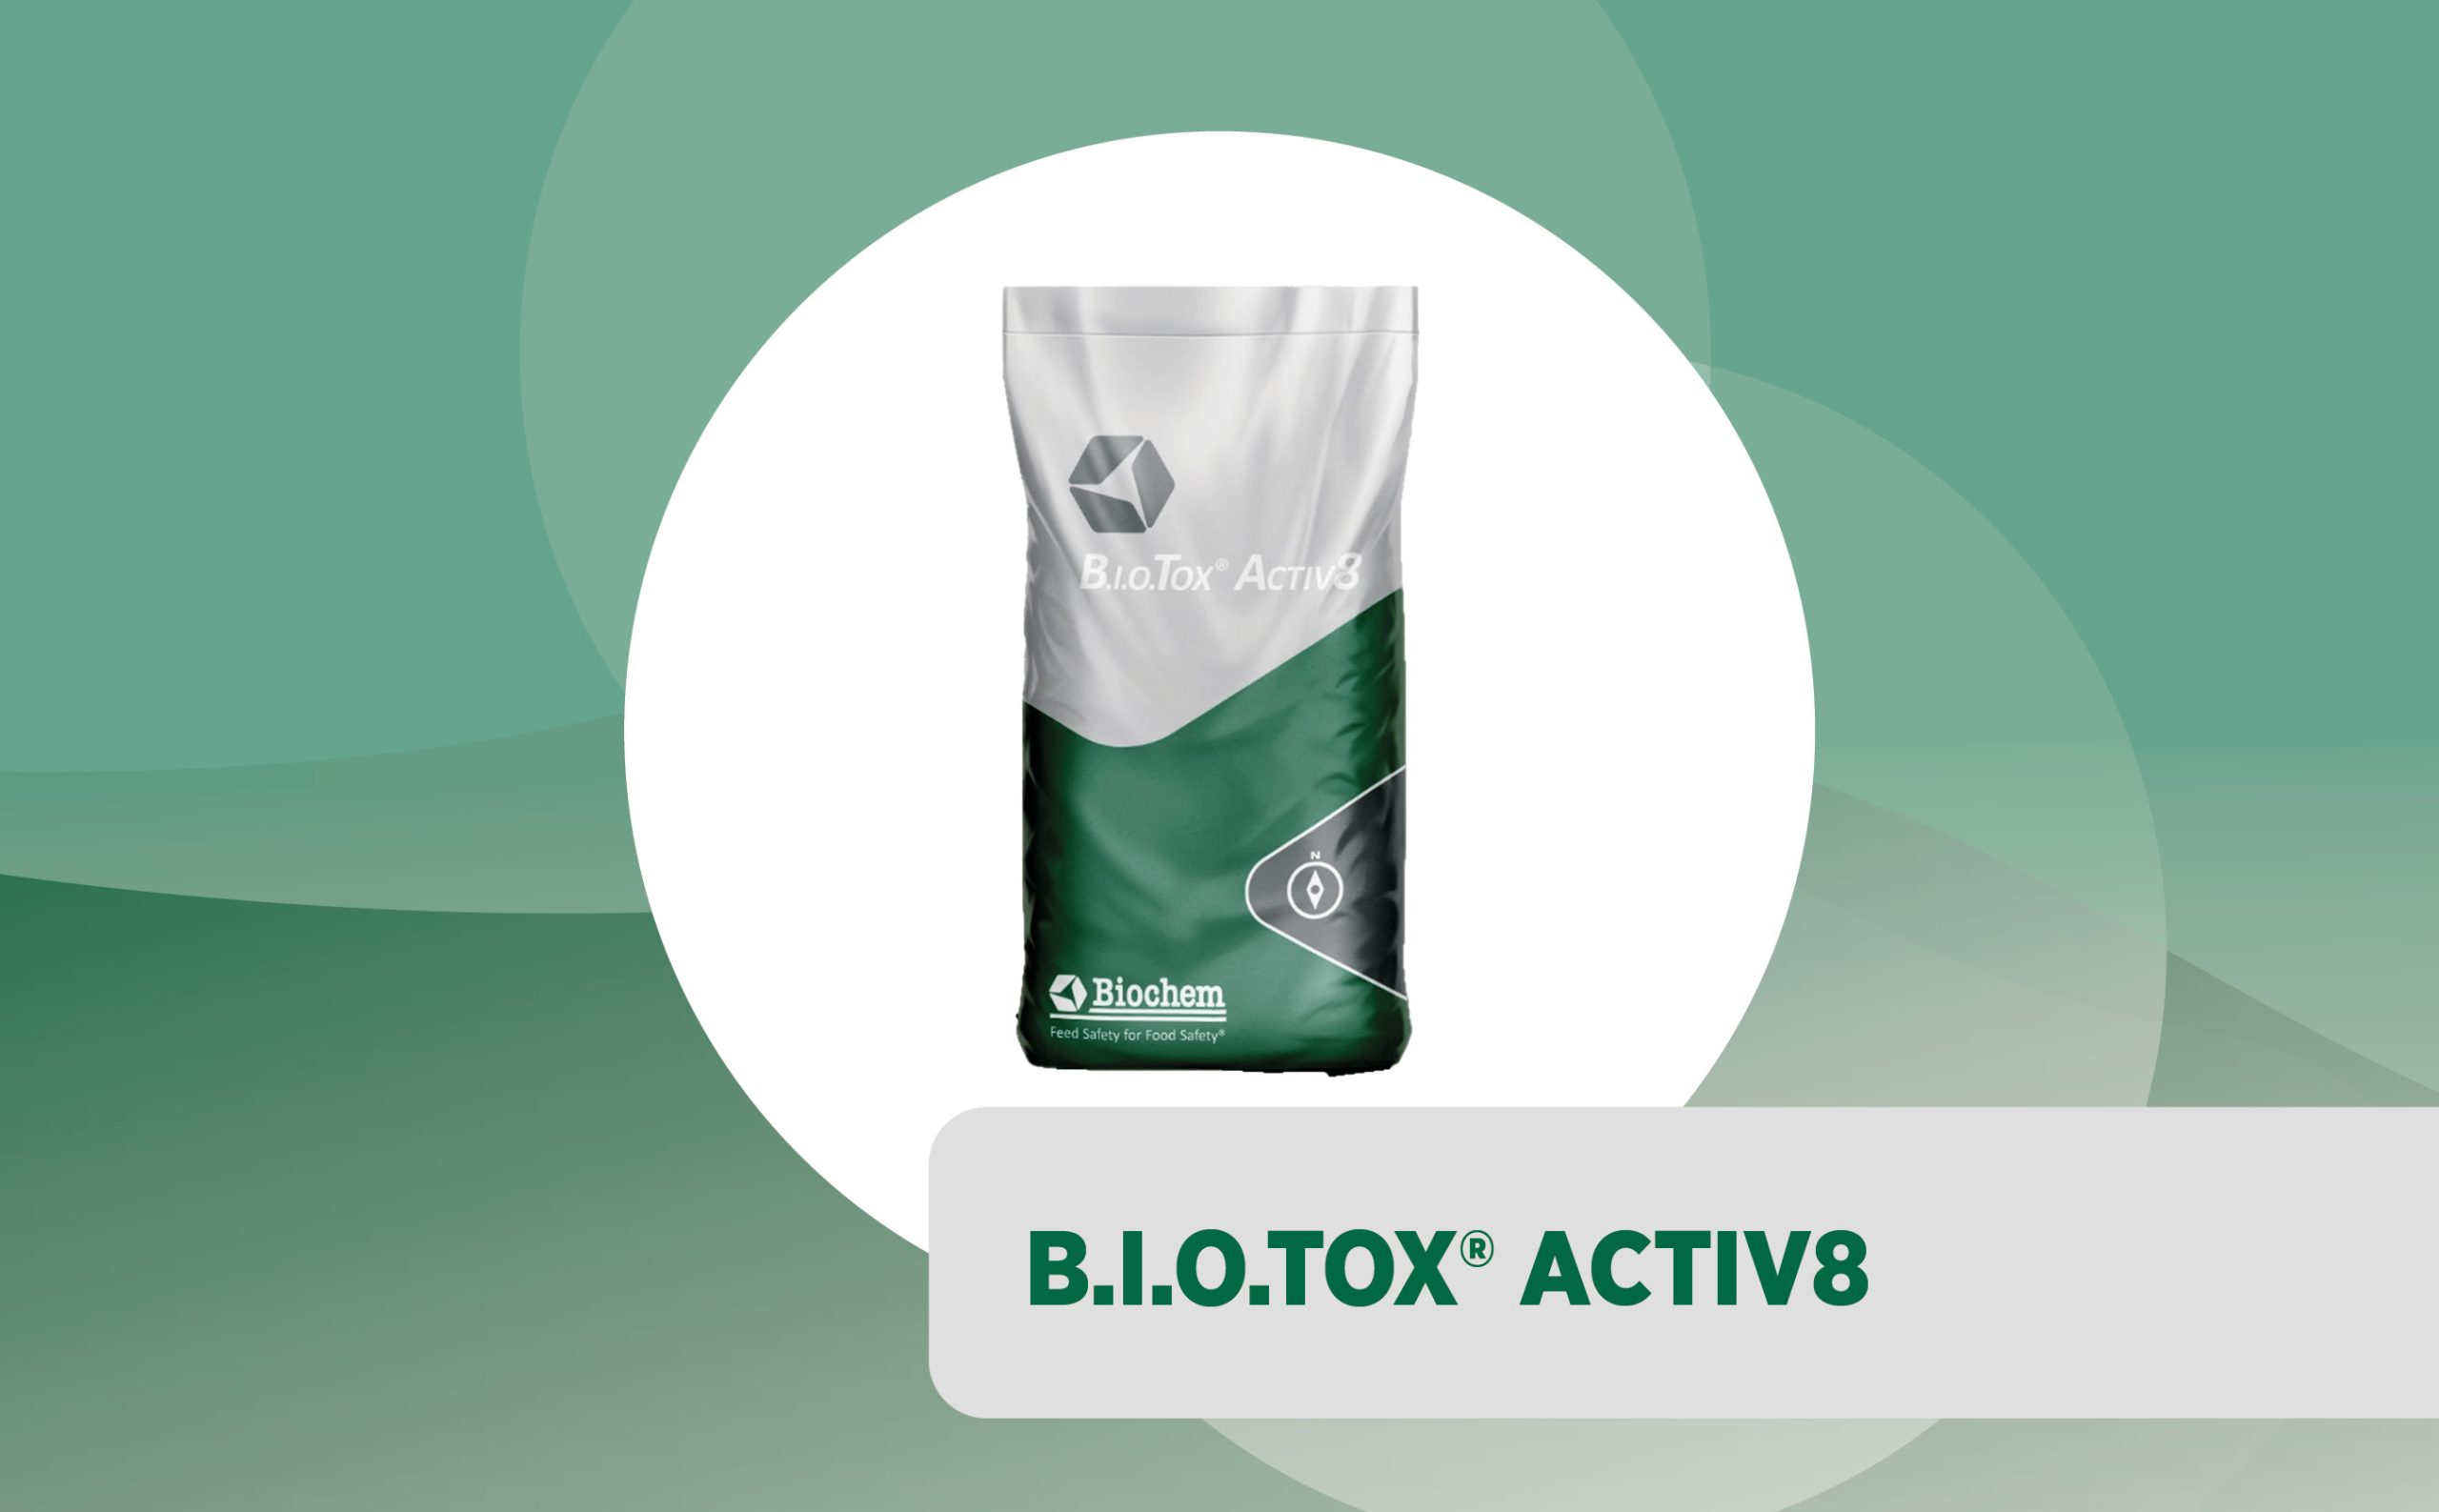 B.I.O.Tox Activ8